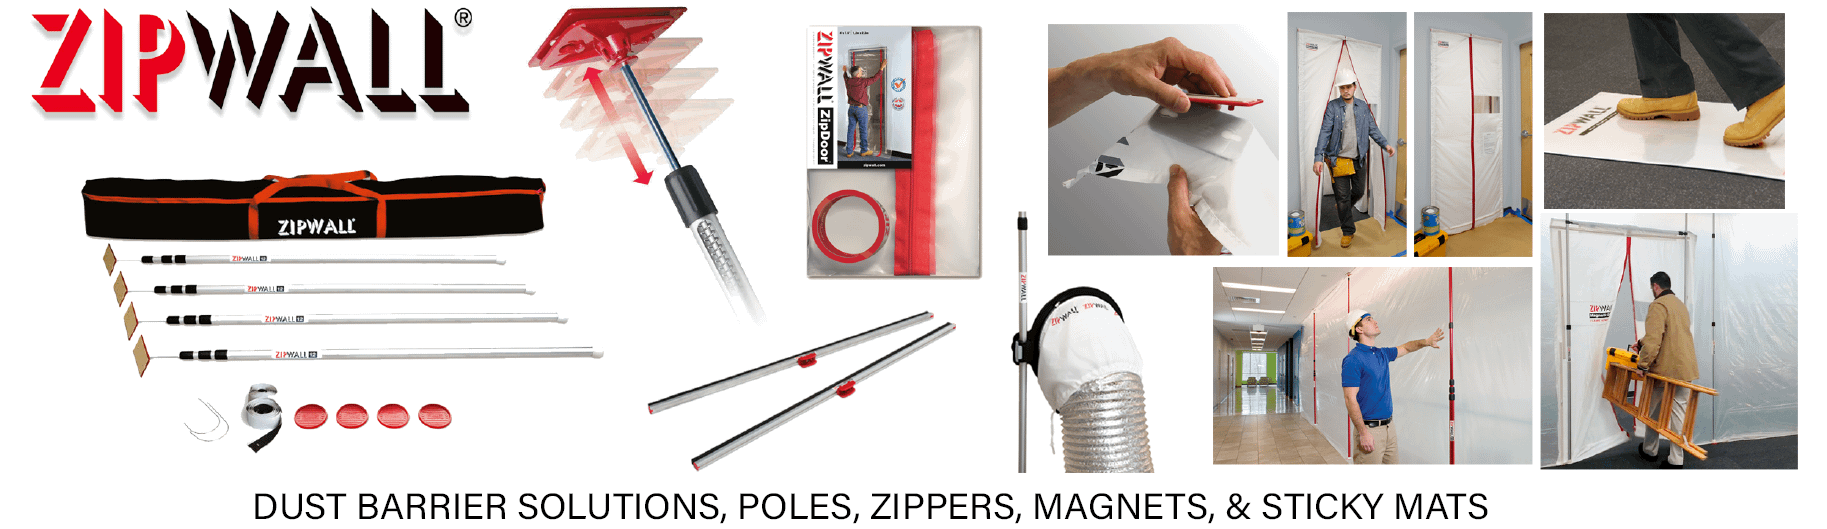 NACH Marketing - ZipWall - Dust Barrier Solutions, Poles, Zippers, Magnets